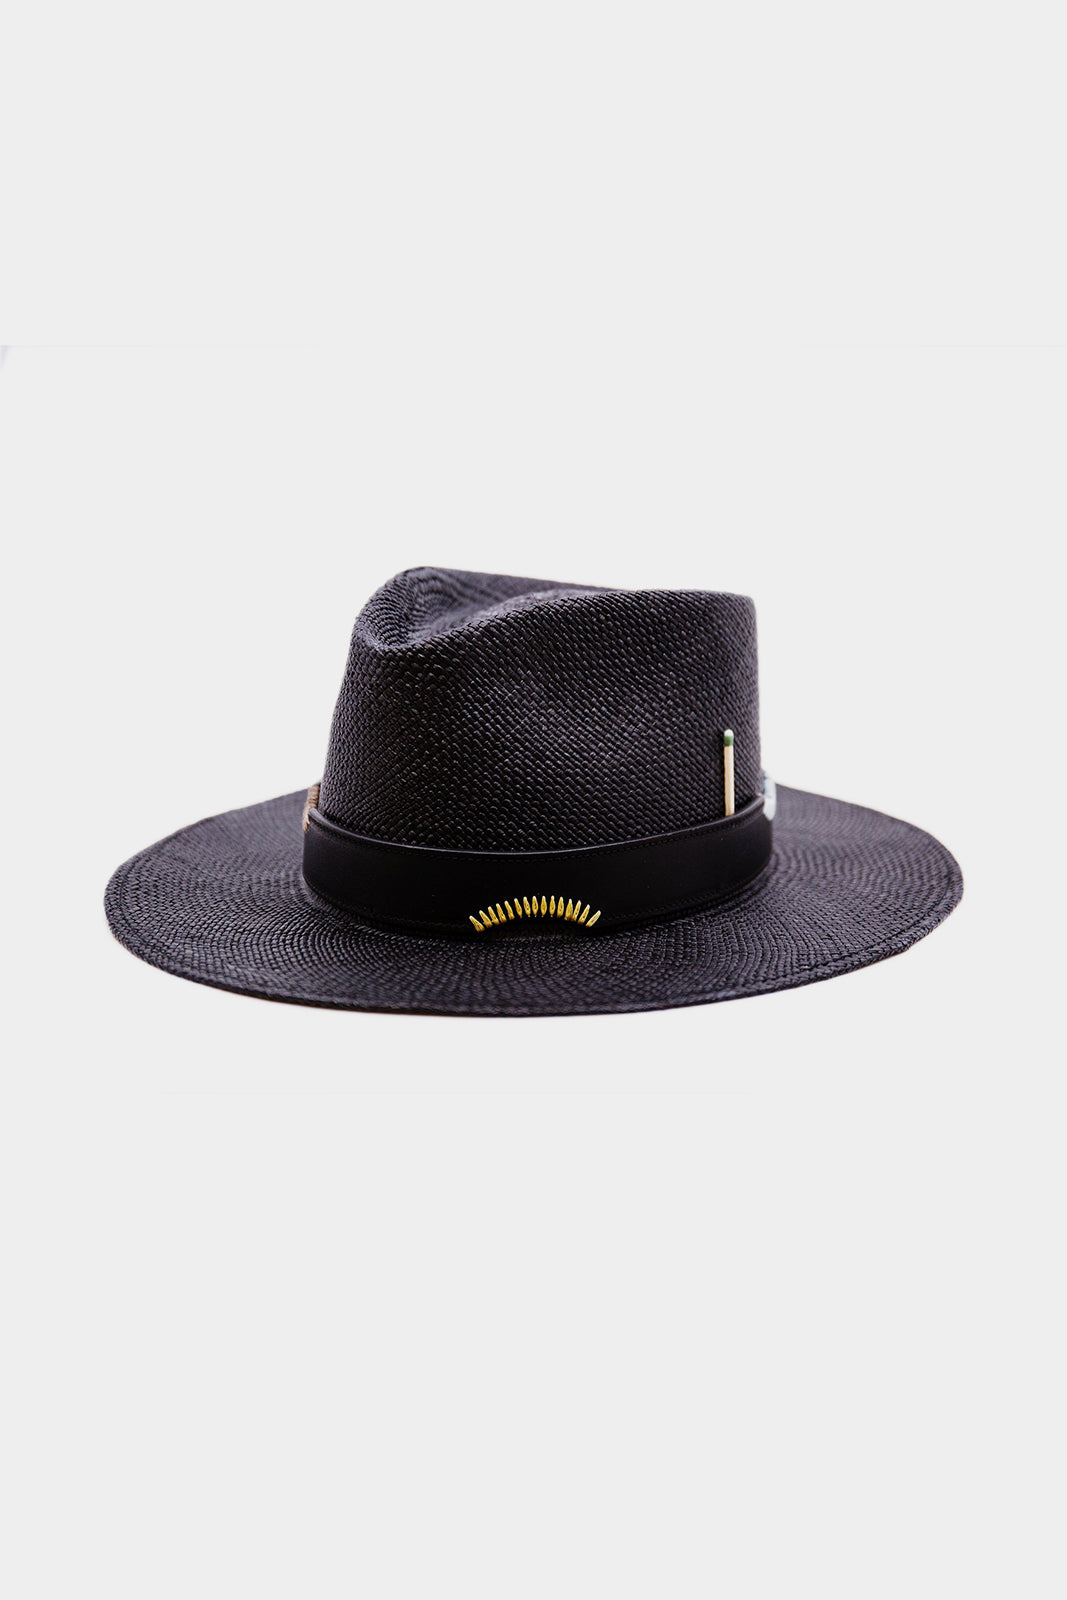 Rem Hat